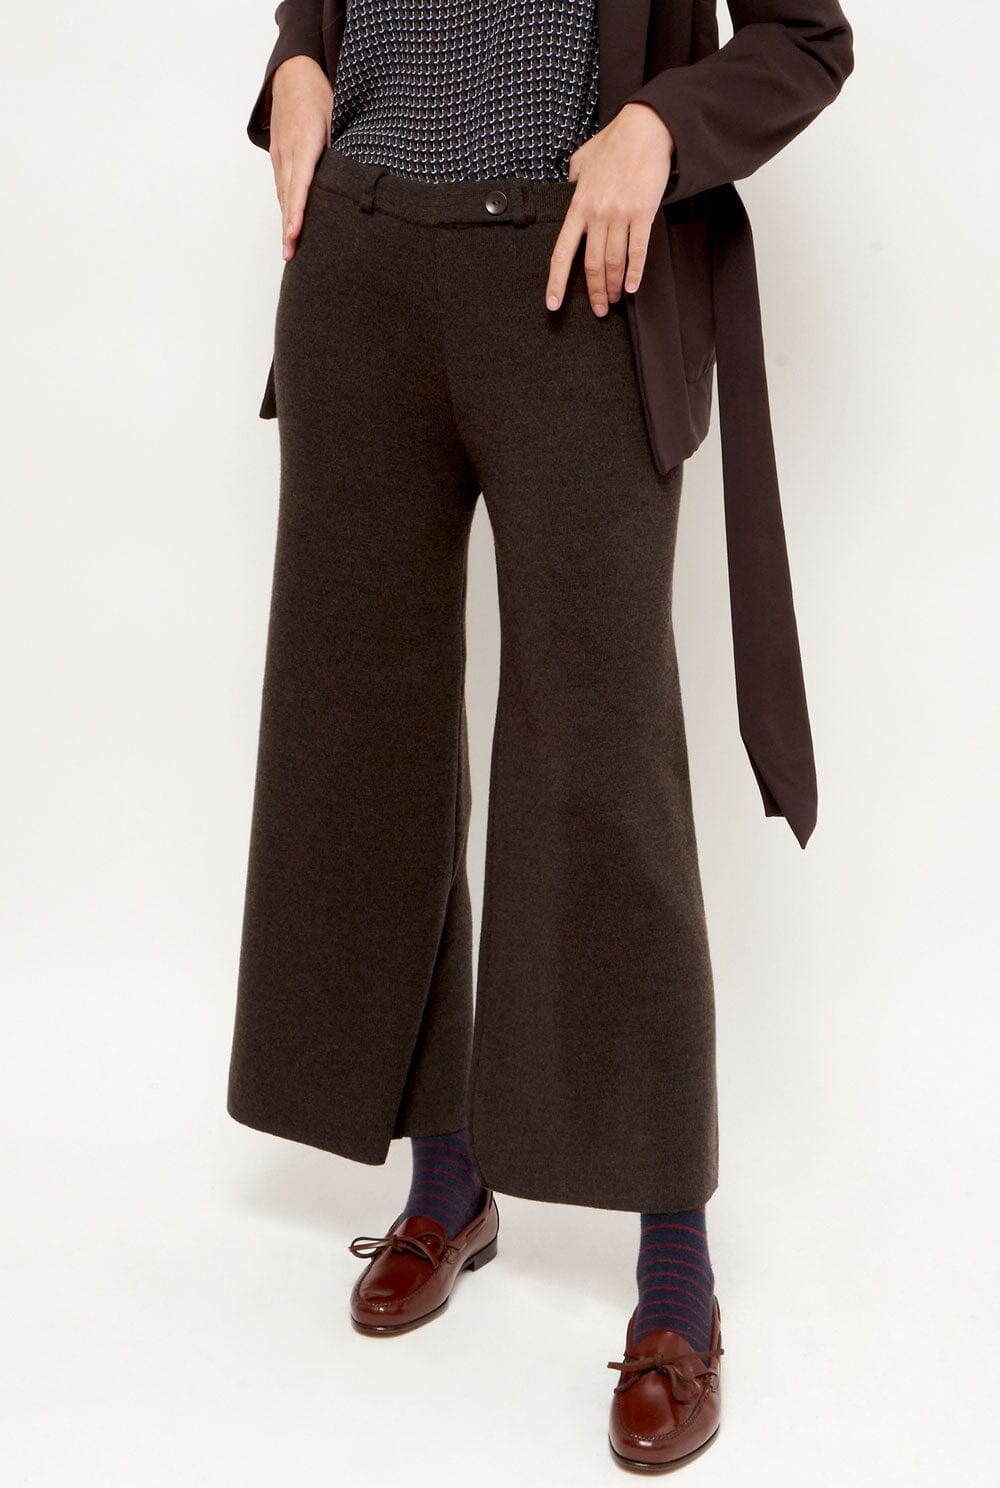 Pantalón farrah marrón Trousers Culto 1105 